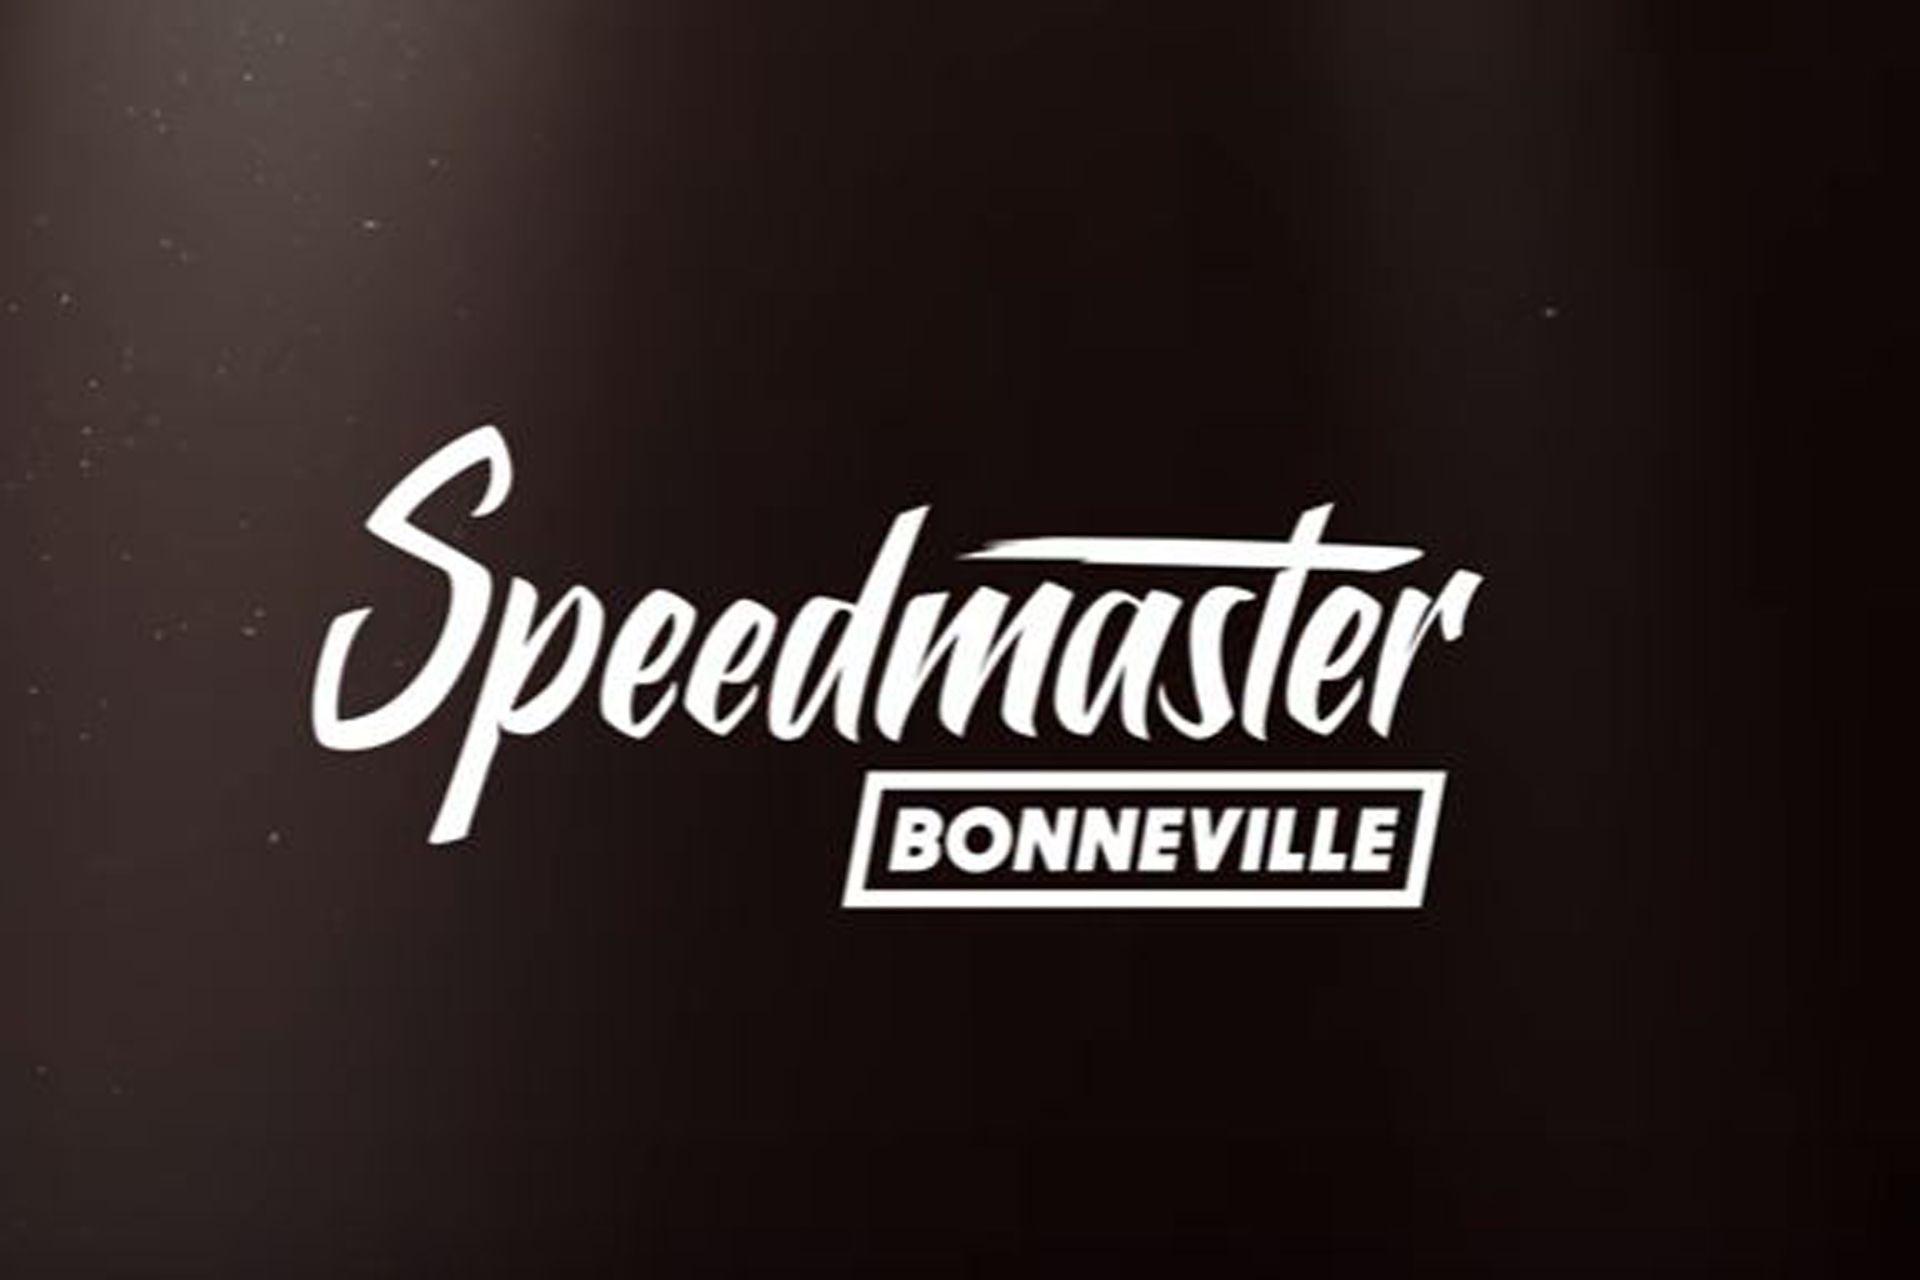 New Triumph Logo - New Triumph Bonneville Speedmaster, UK unveil on October 3 - Fast ...